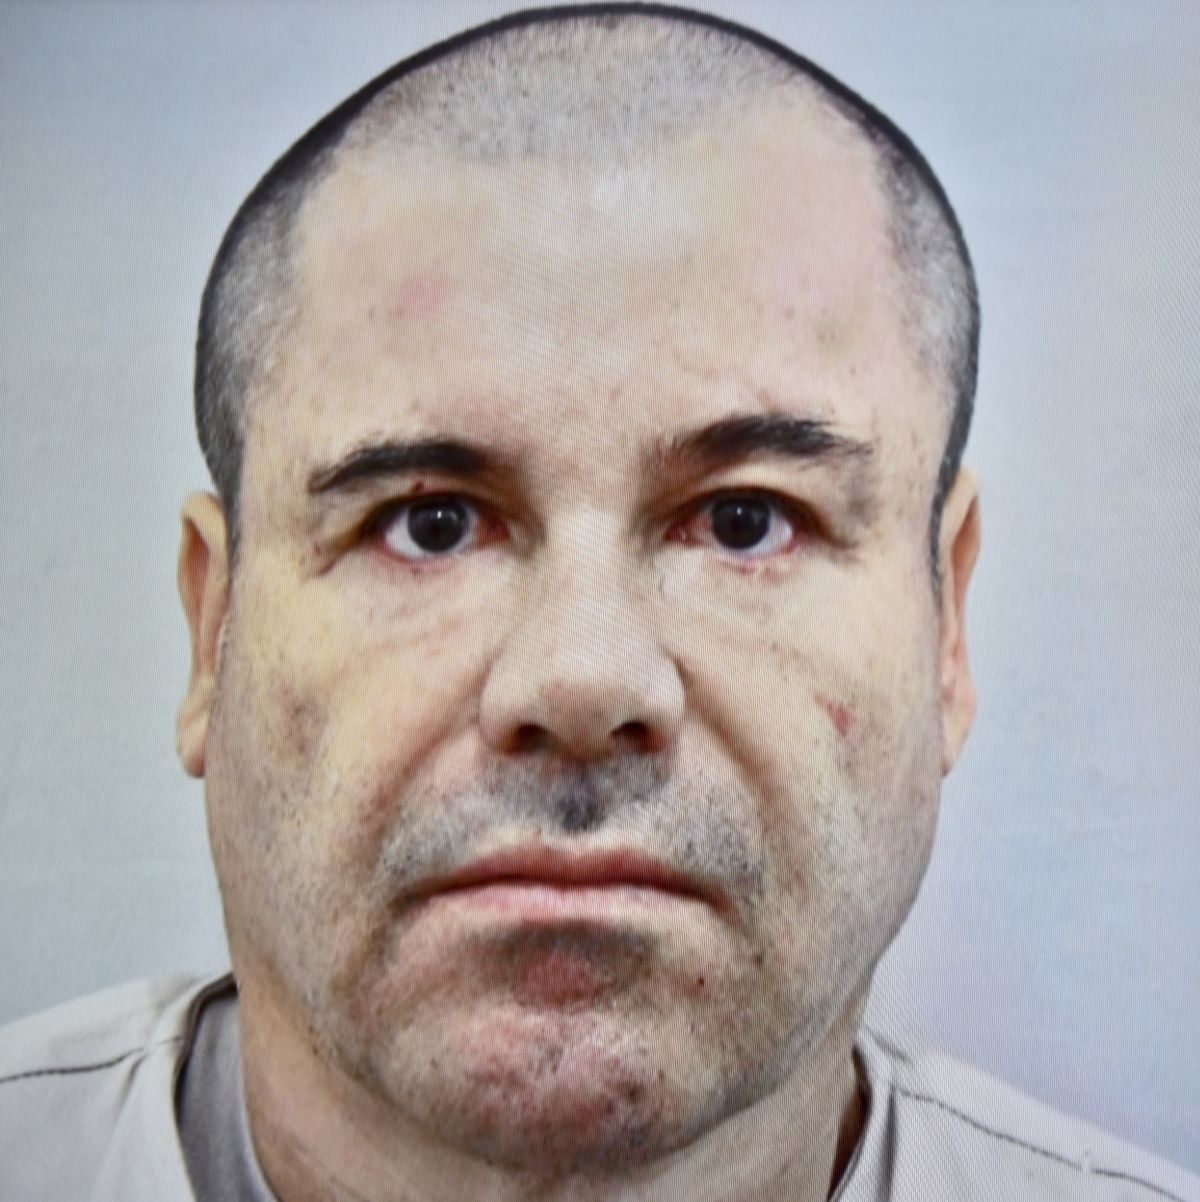 Joaquin 'El Chapo' Guzman photo via Getty Images